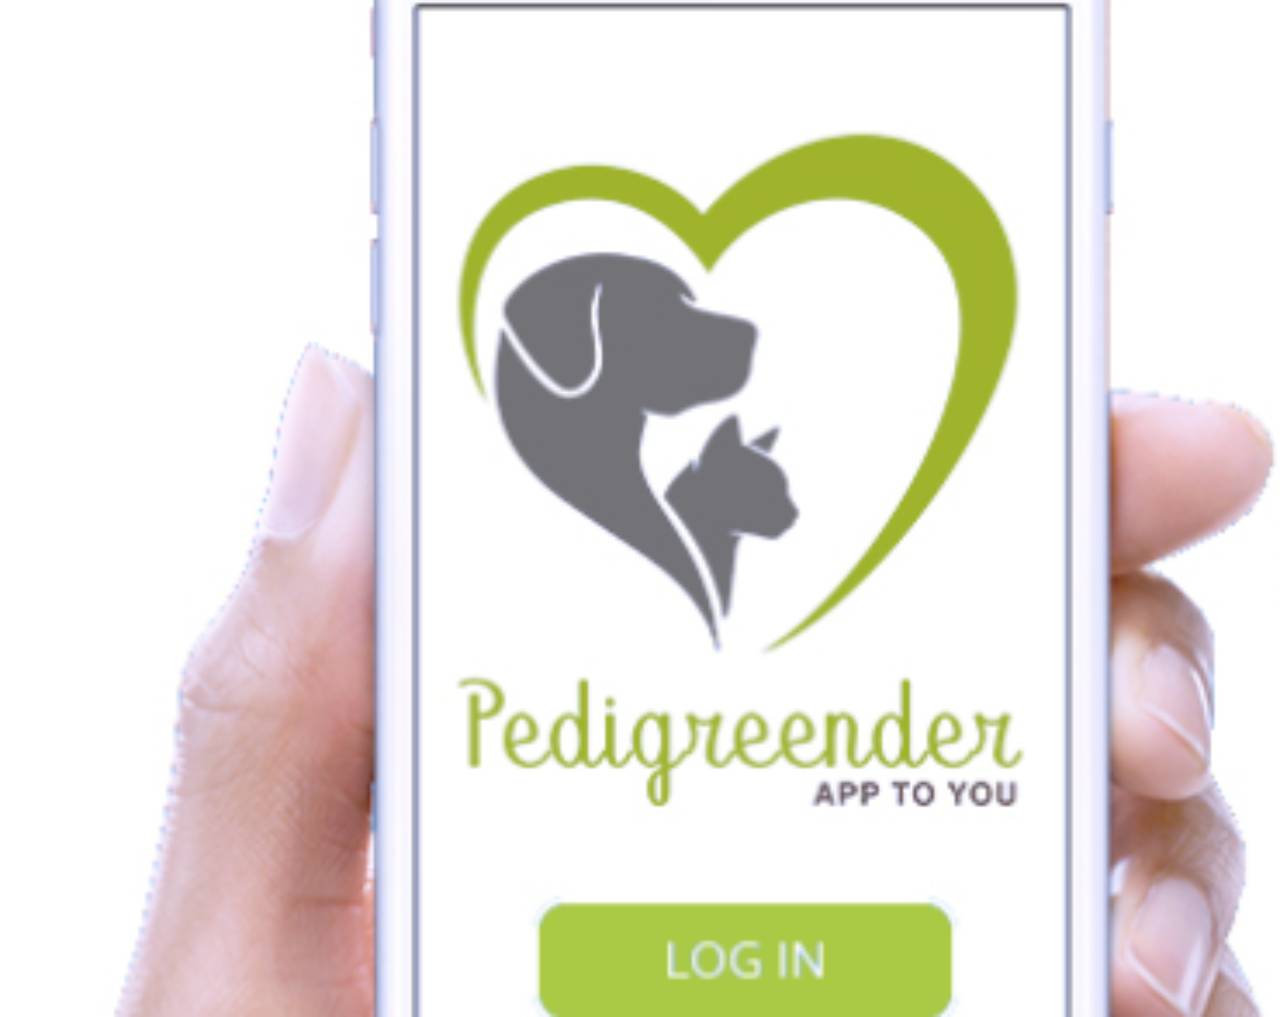 Pedigreender app animali